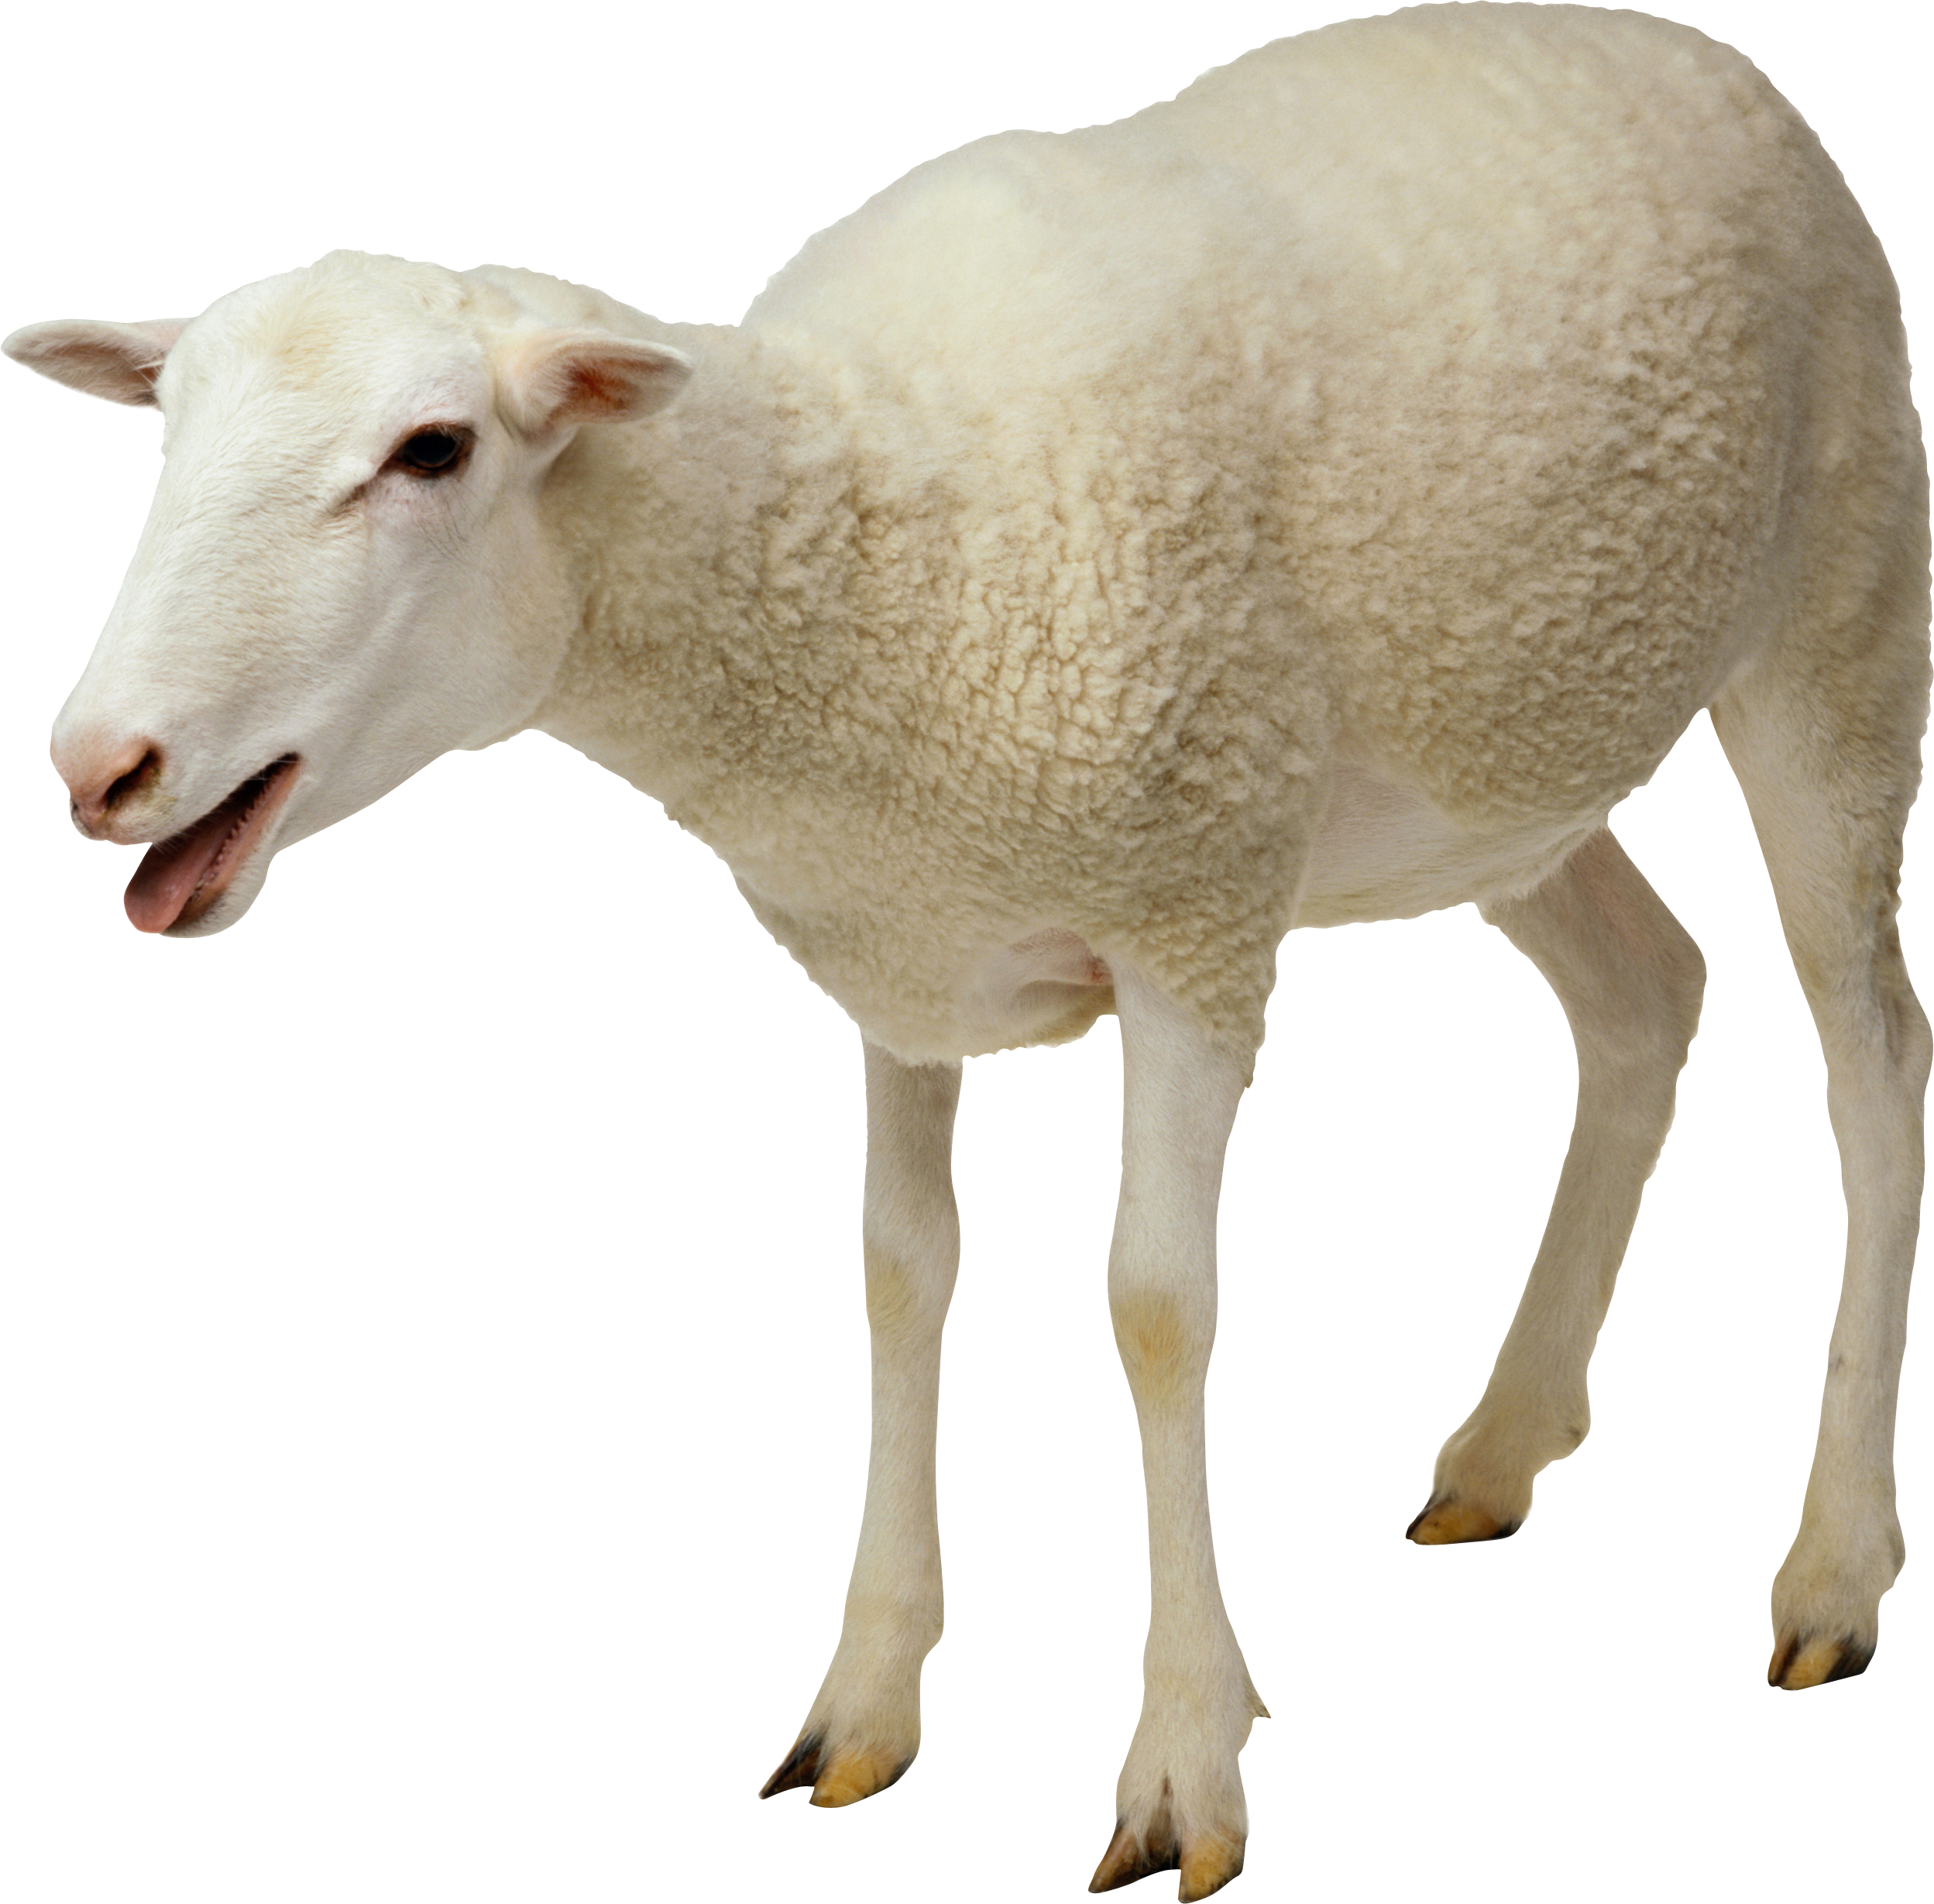 Sheep Png Image, Free Download - Sheep Png (2497x2458)